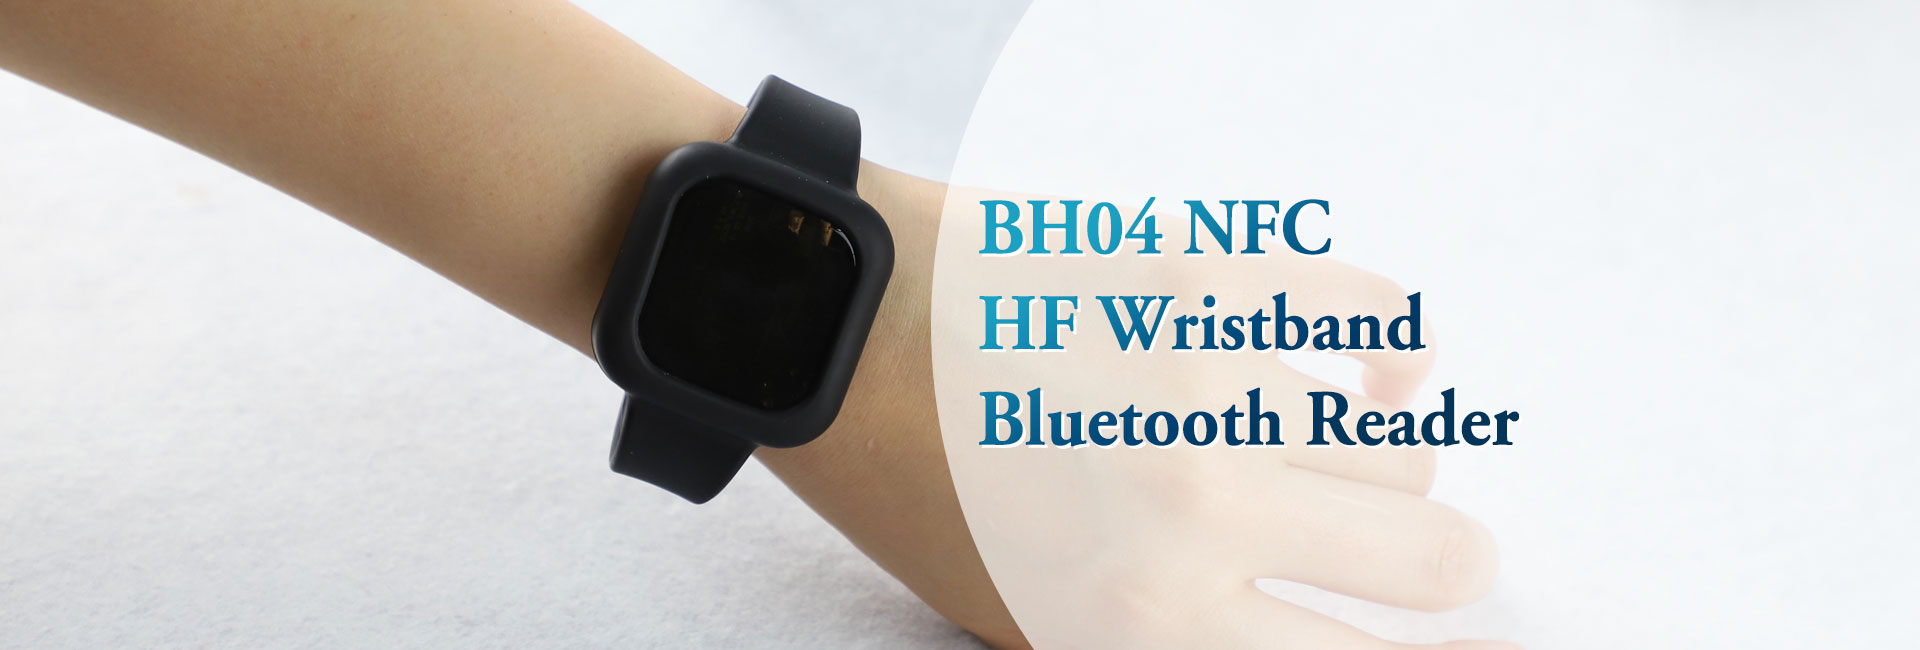 BH04 NFC HF Wristband Bluetooth Reader